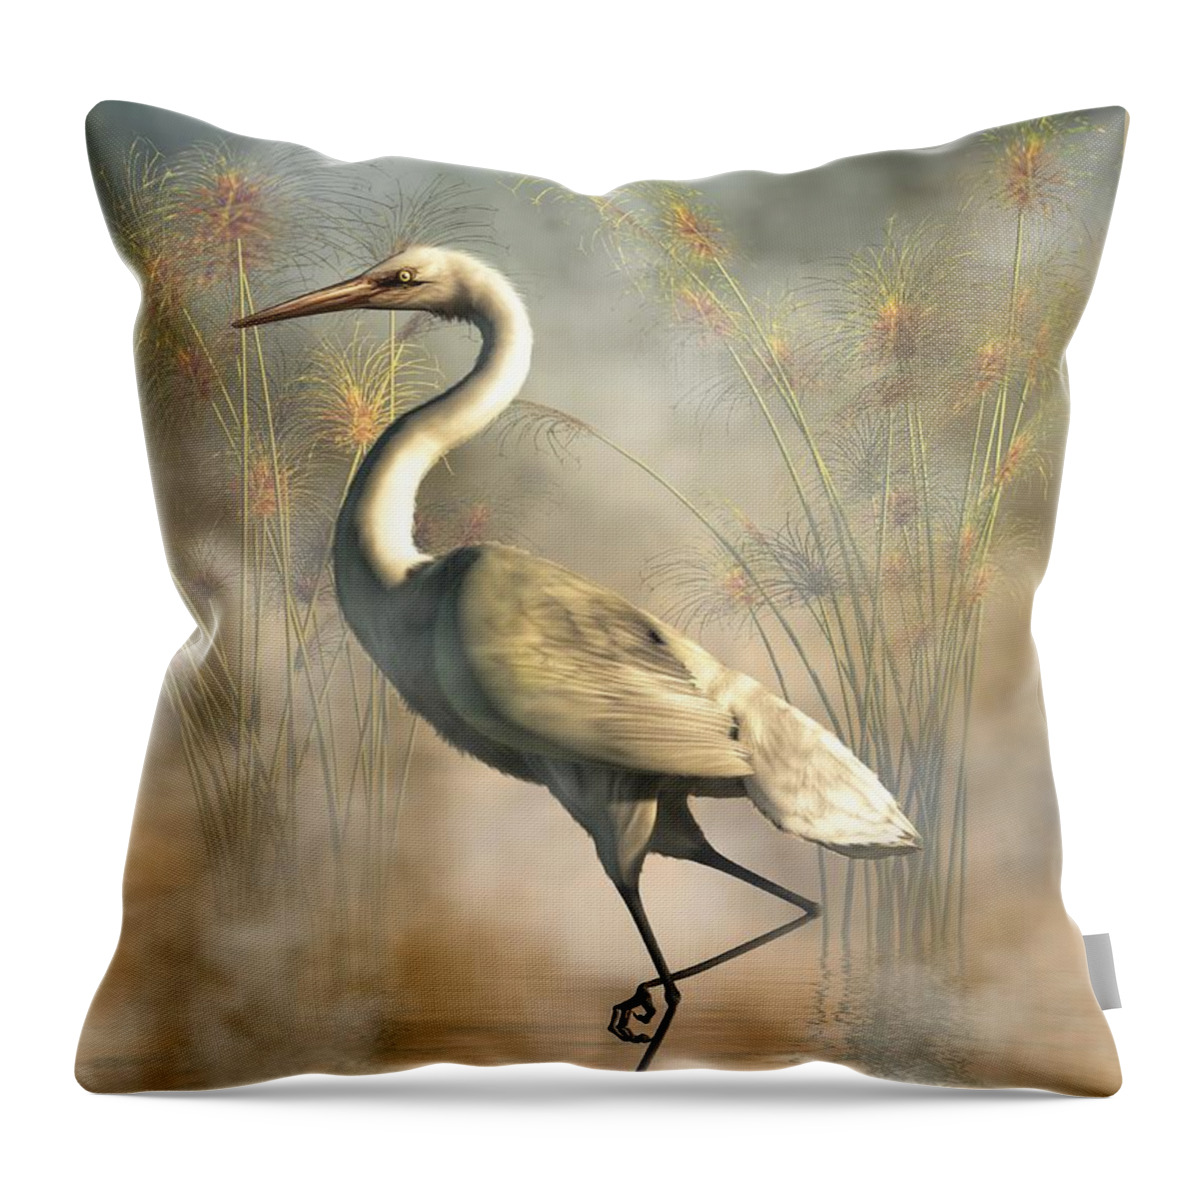 Egret Throw Pillow featuring the digital art Egret by Daniel Eskridge